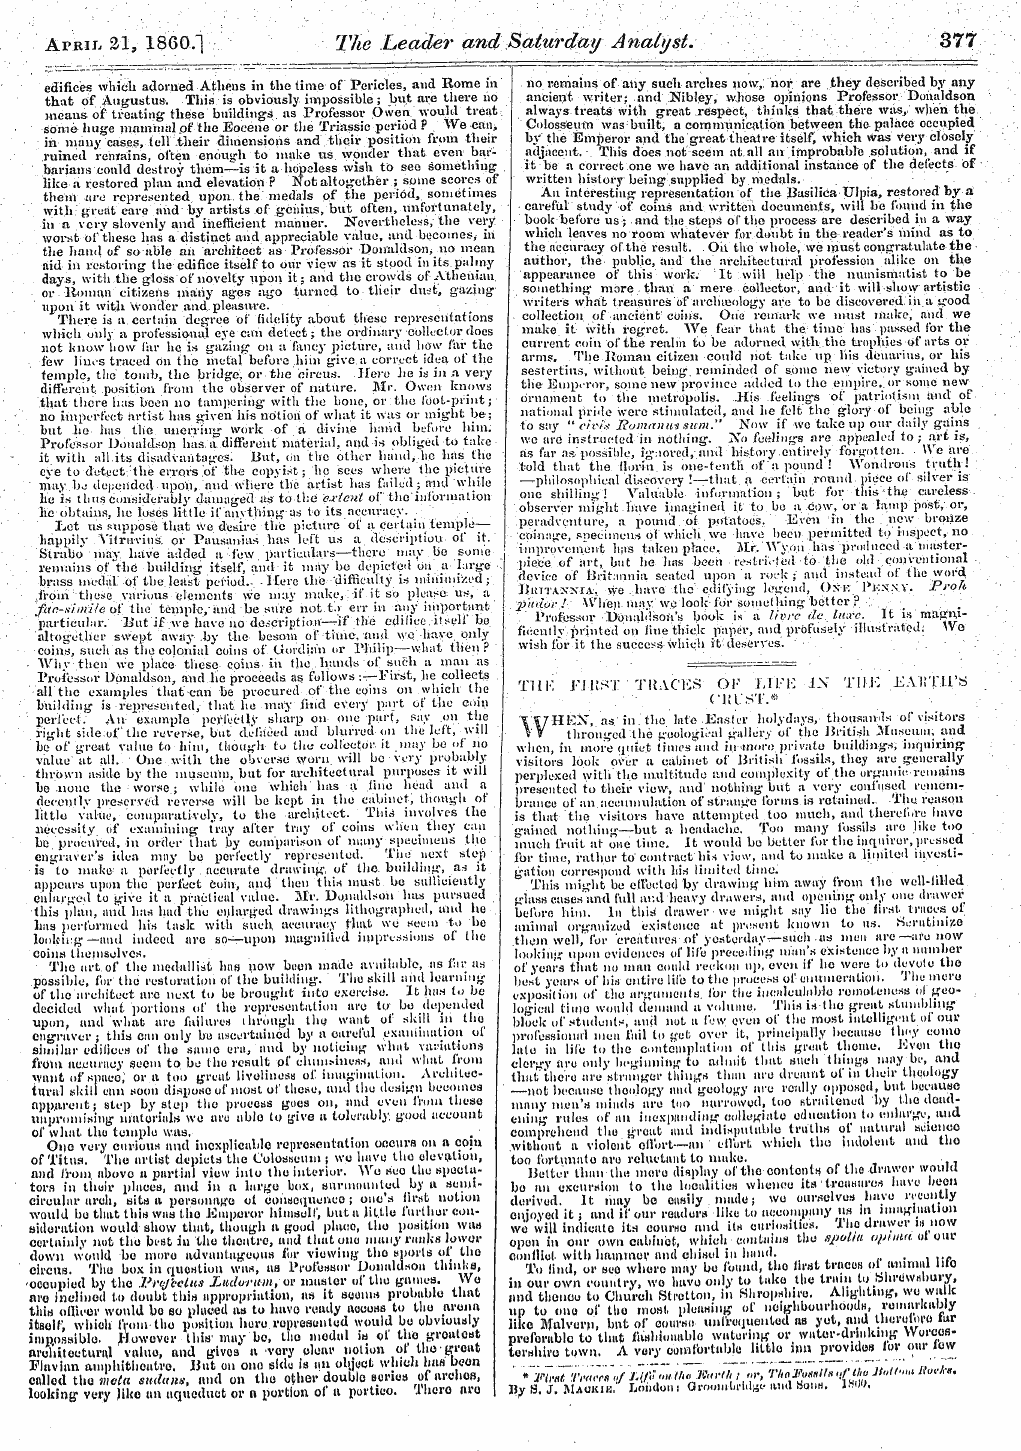 Leader (1850-1860): jS F Y, 2nd edition - Ailchitectube On-G0.1ms.* T Tnsciektific...